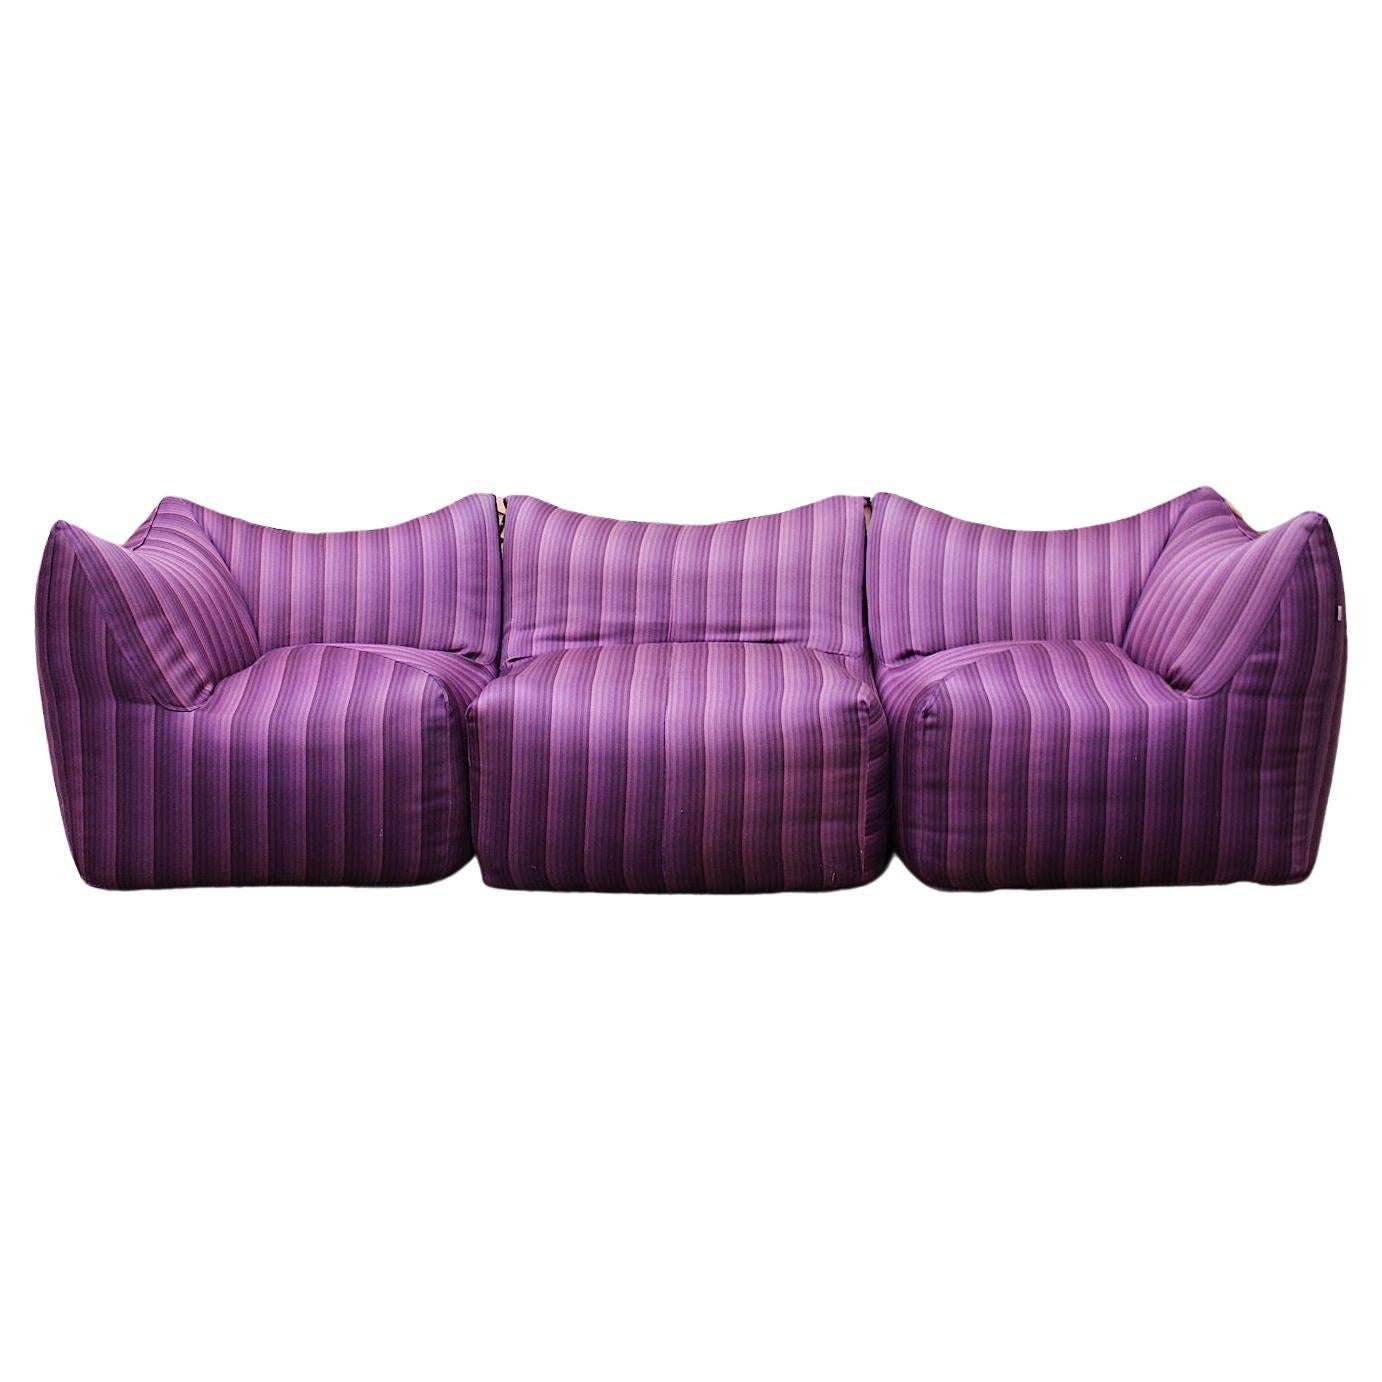 Modulares Vintage-Sofa Le Bambole in Violett und Lavendel von Mario Bellini, Space Age, 1970er Jahre 